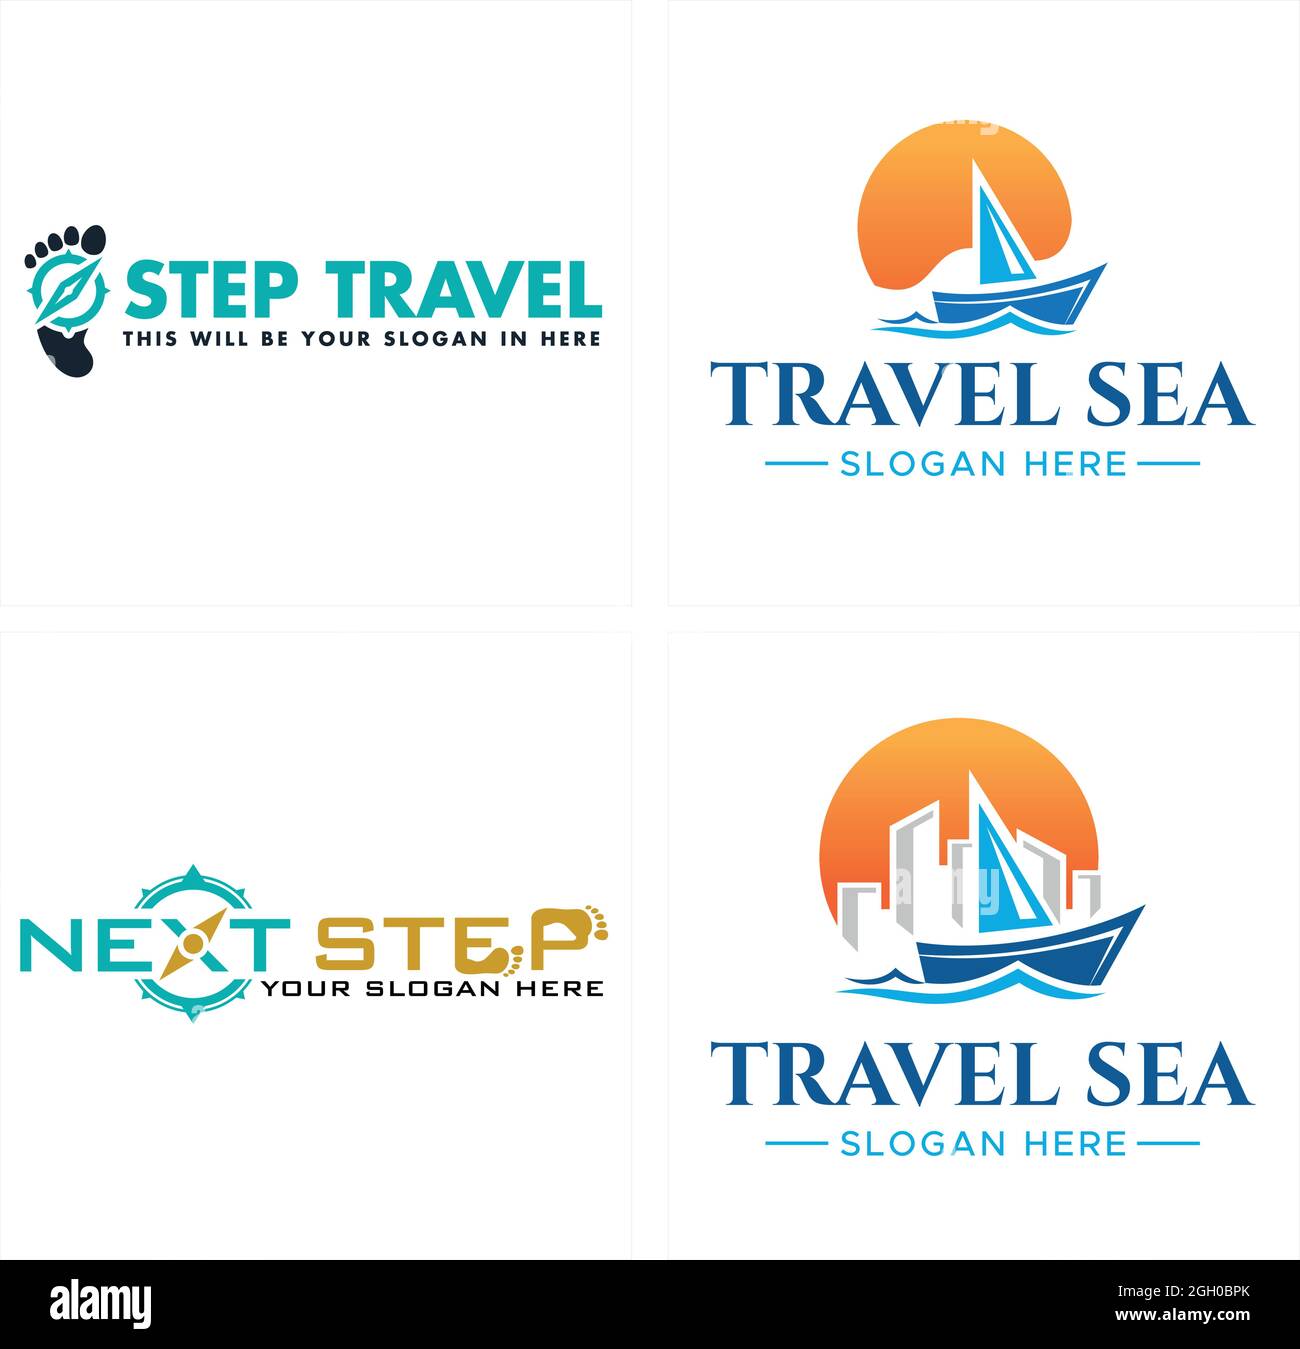 Travel sea vacation logo design Stock Vector